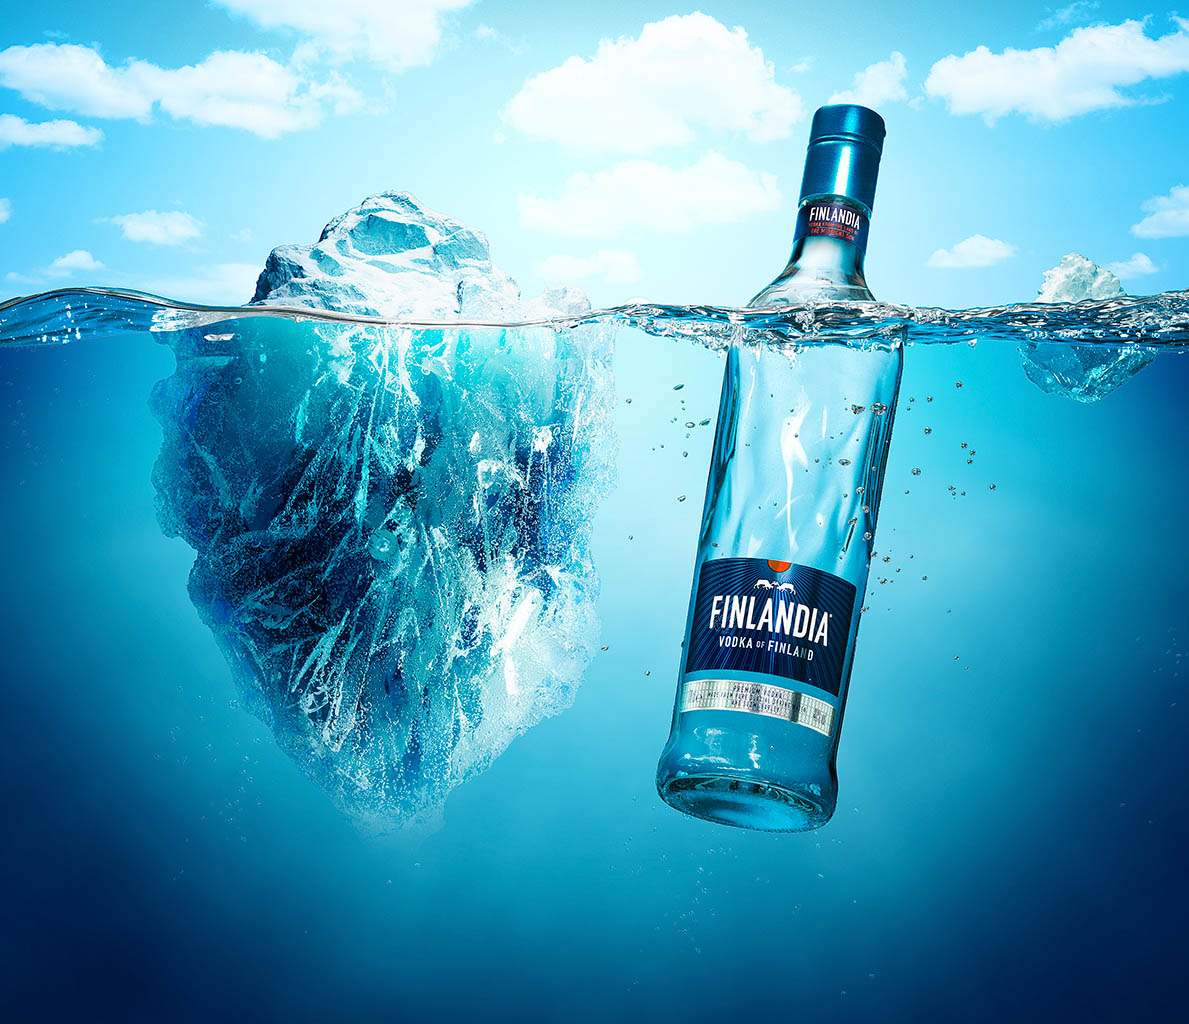 Packshot Factory - Advertising Still Life Product Photography Portfolio - Belvedere  vodka bottle